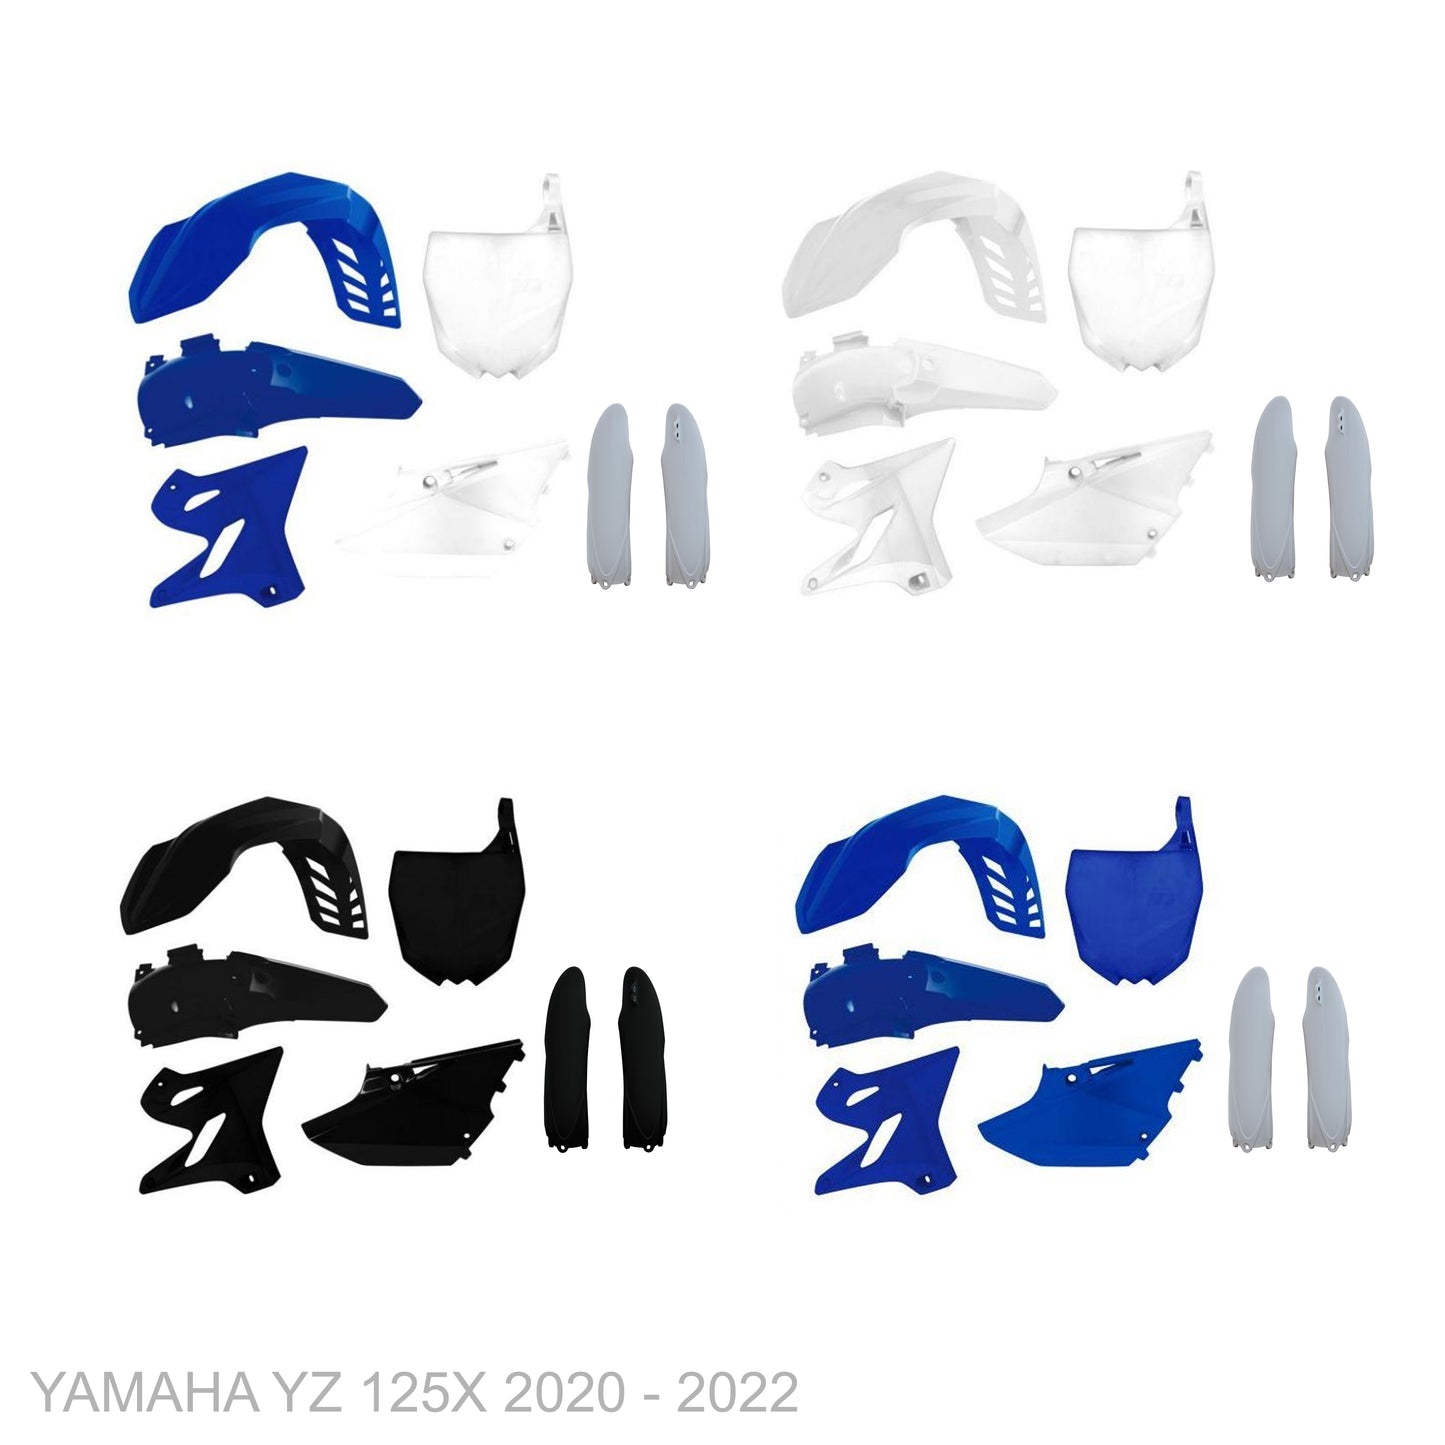 YAMAHA YZ 125X 2020 - 2022 Retro Graphics Kit